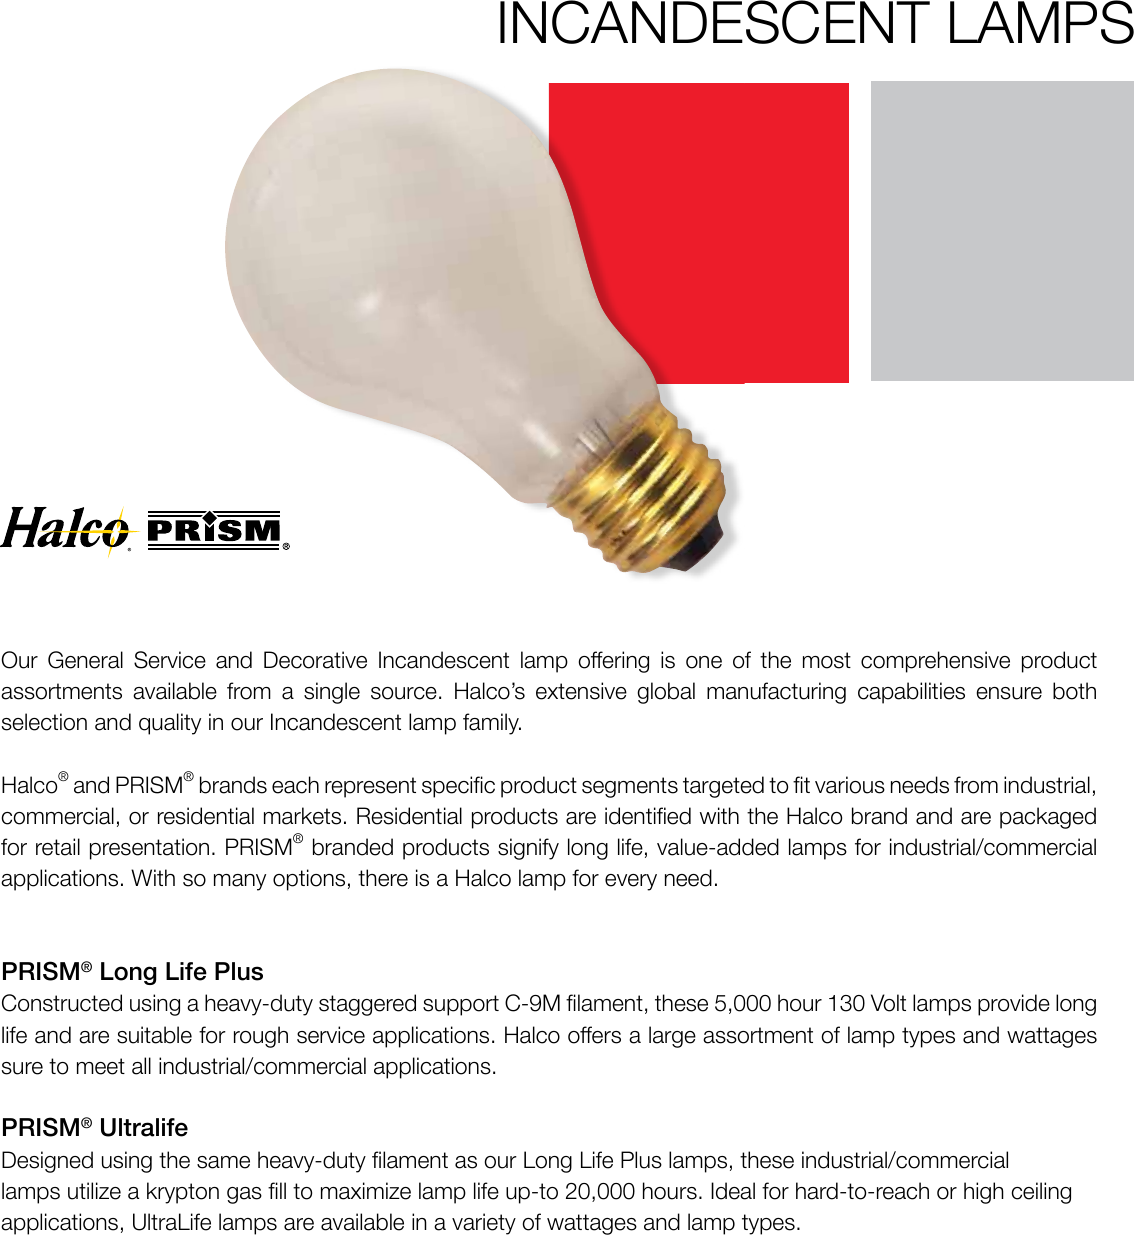 Halco 107130 MR16EYC/SC MR16 Halogen Light Bulb 